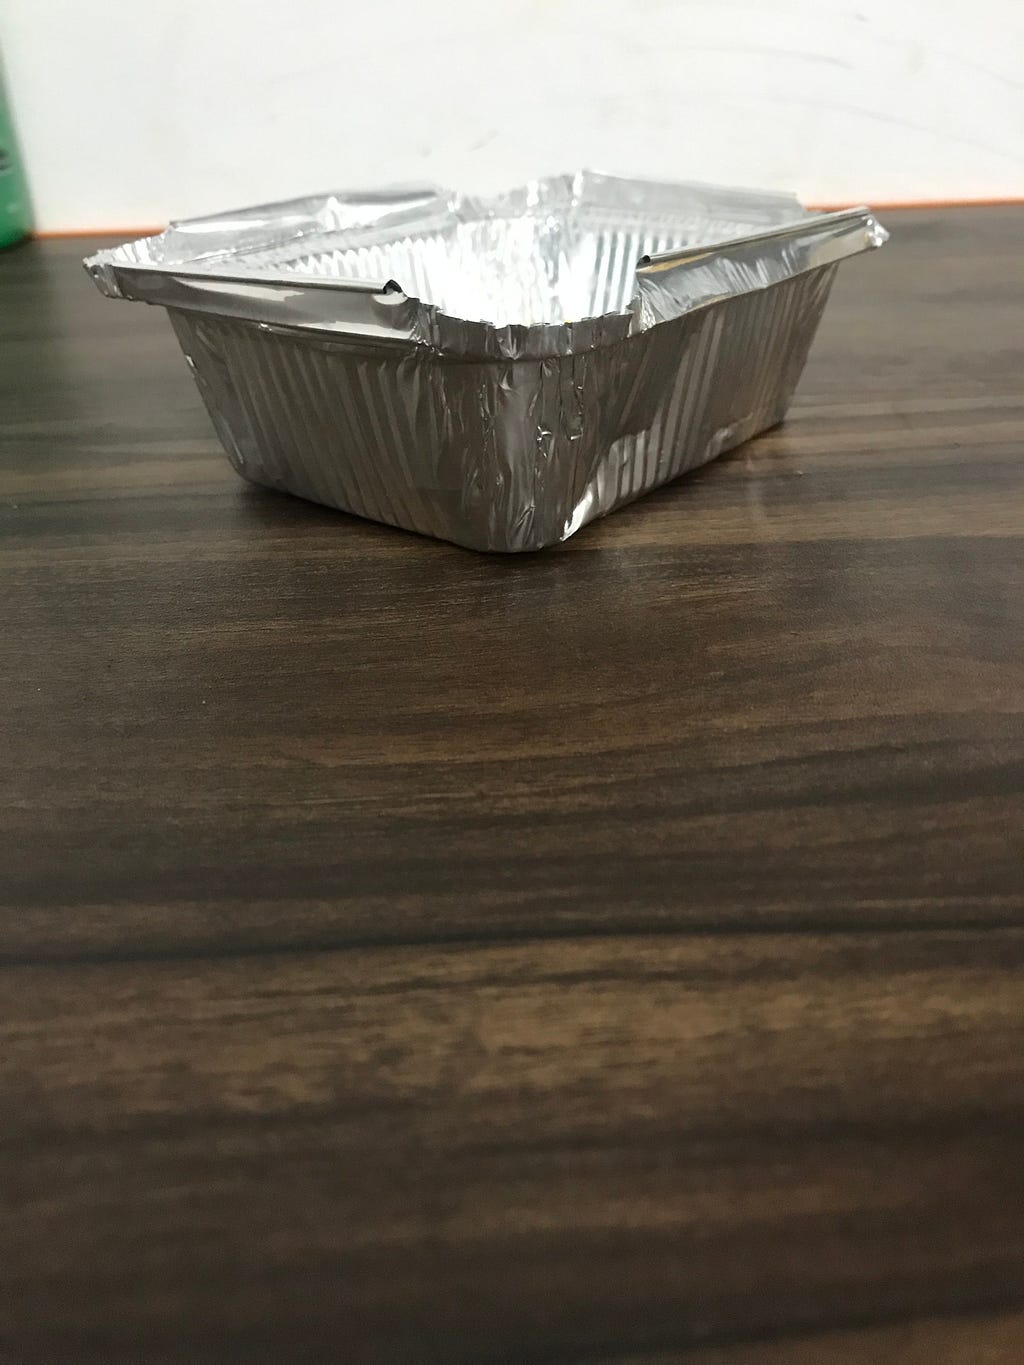 Image of a aluminum foil packaging bowl.